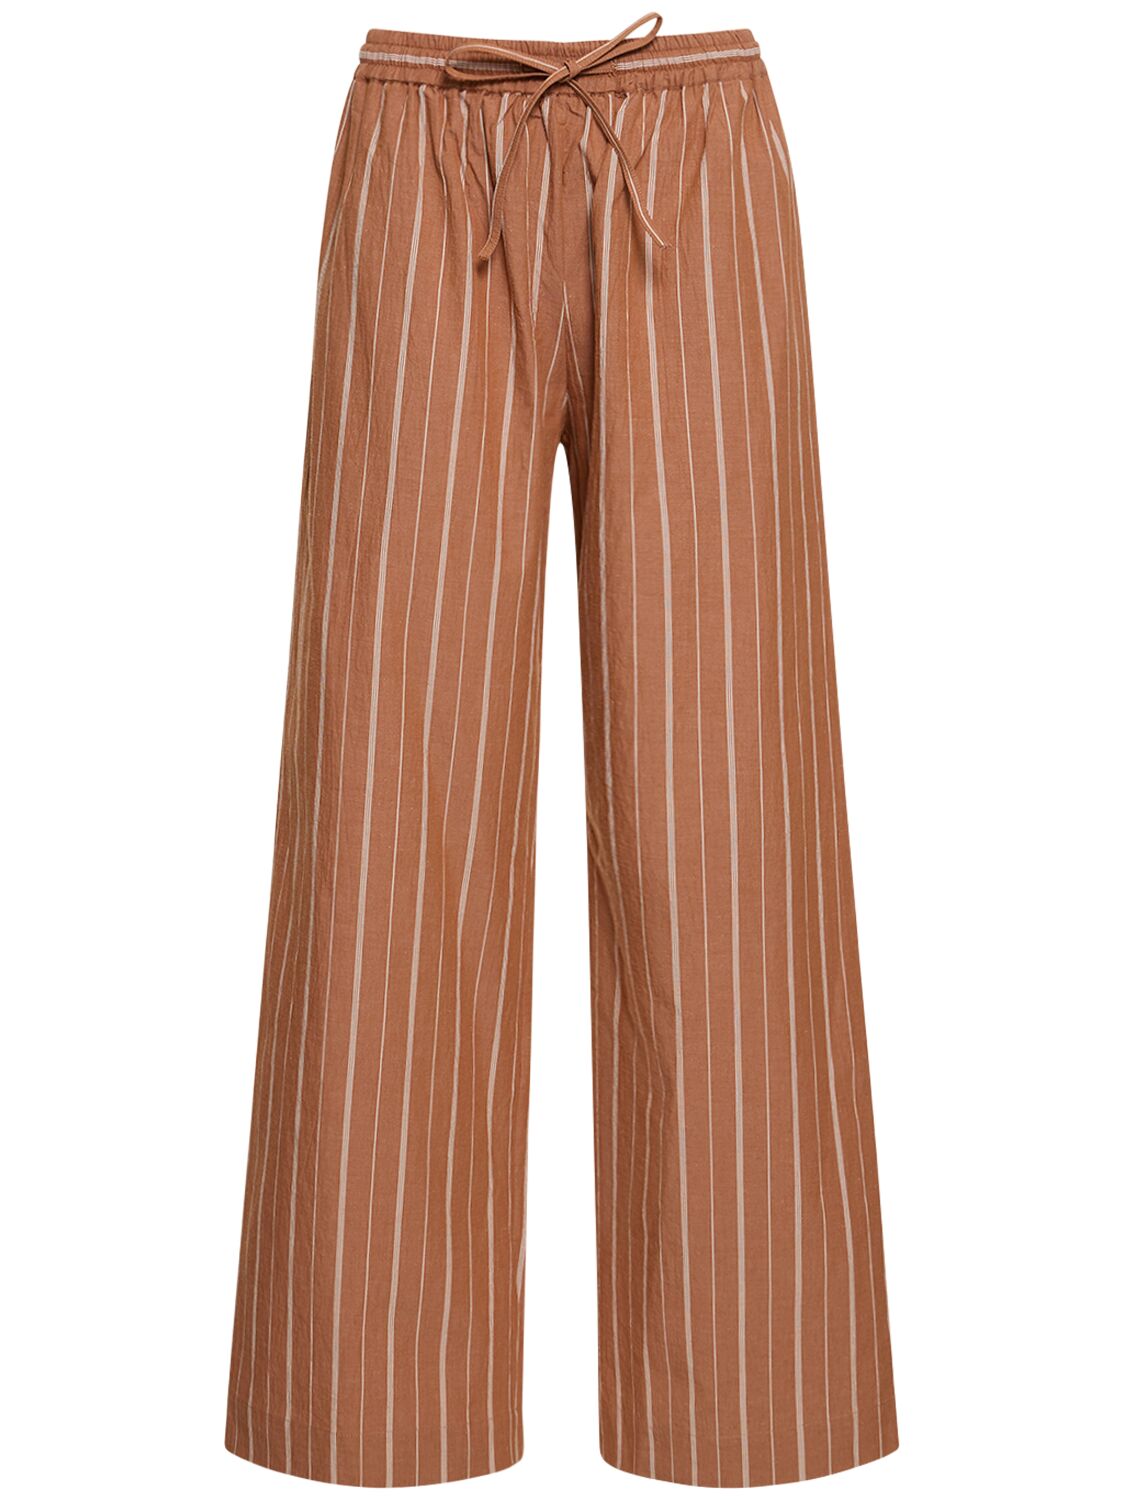 Image of Striped Cotton & Linen Pants